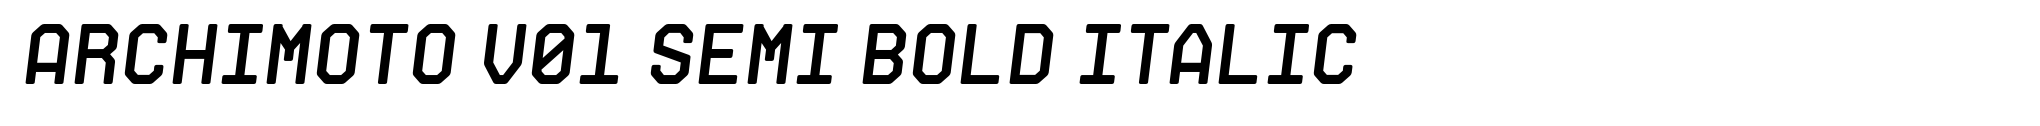 Archimoto V01 Semi Bold Italic image